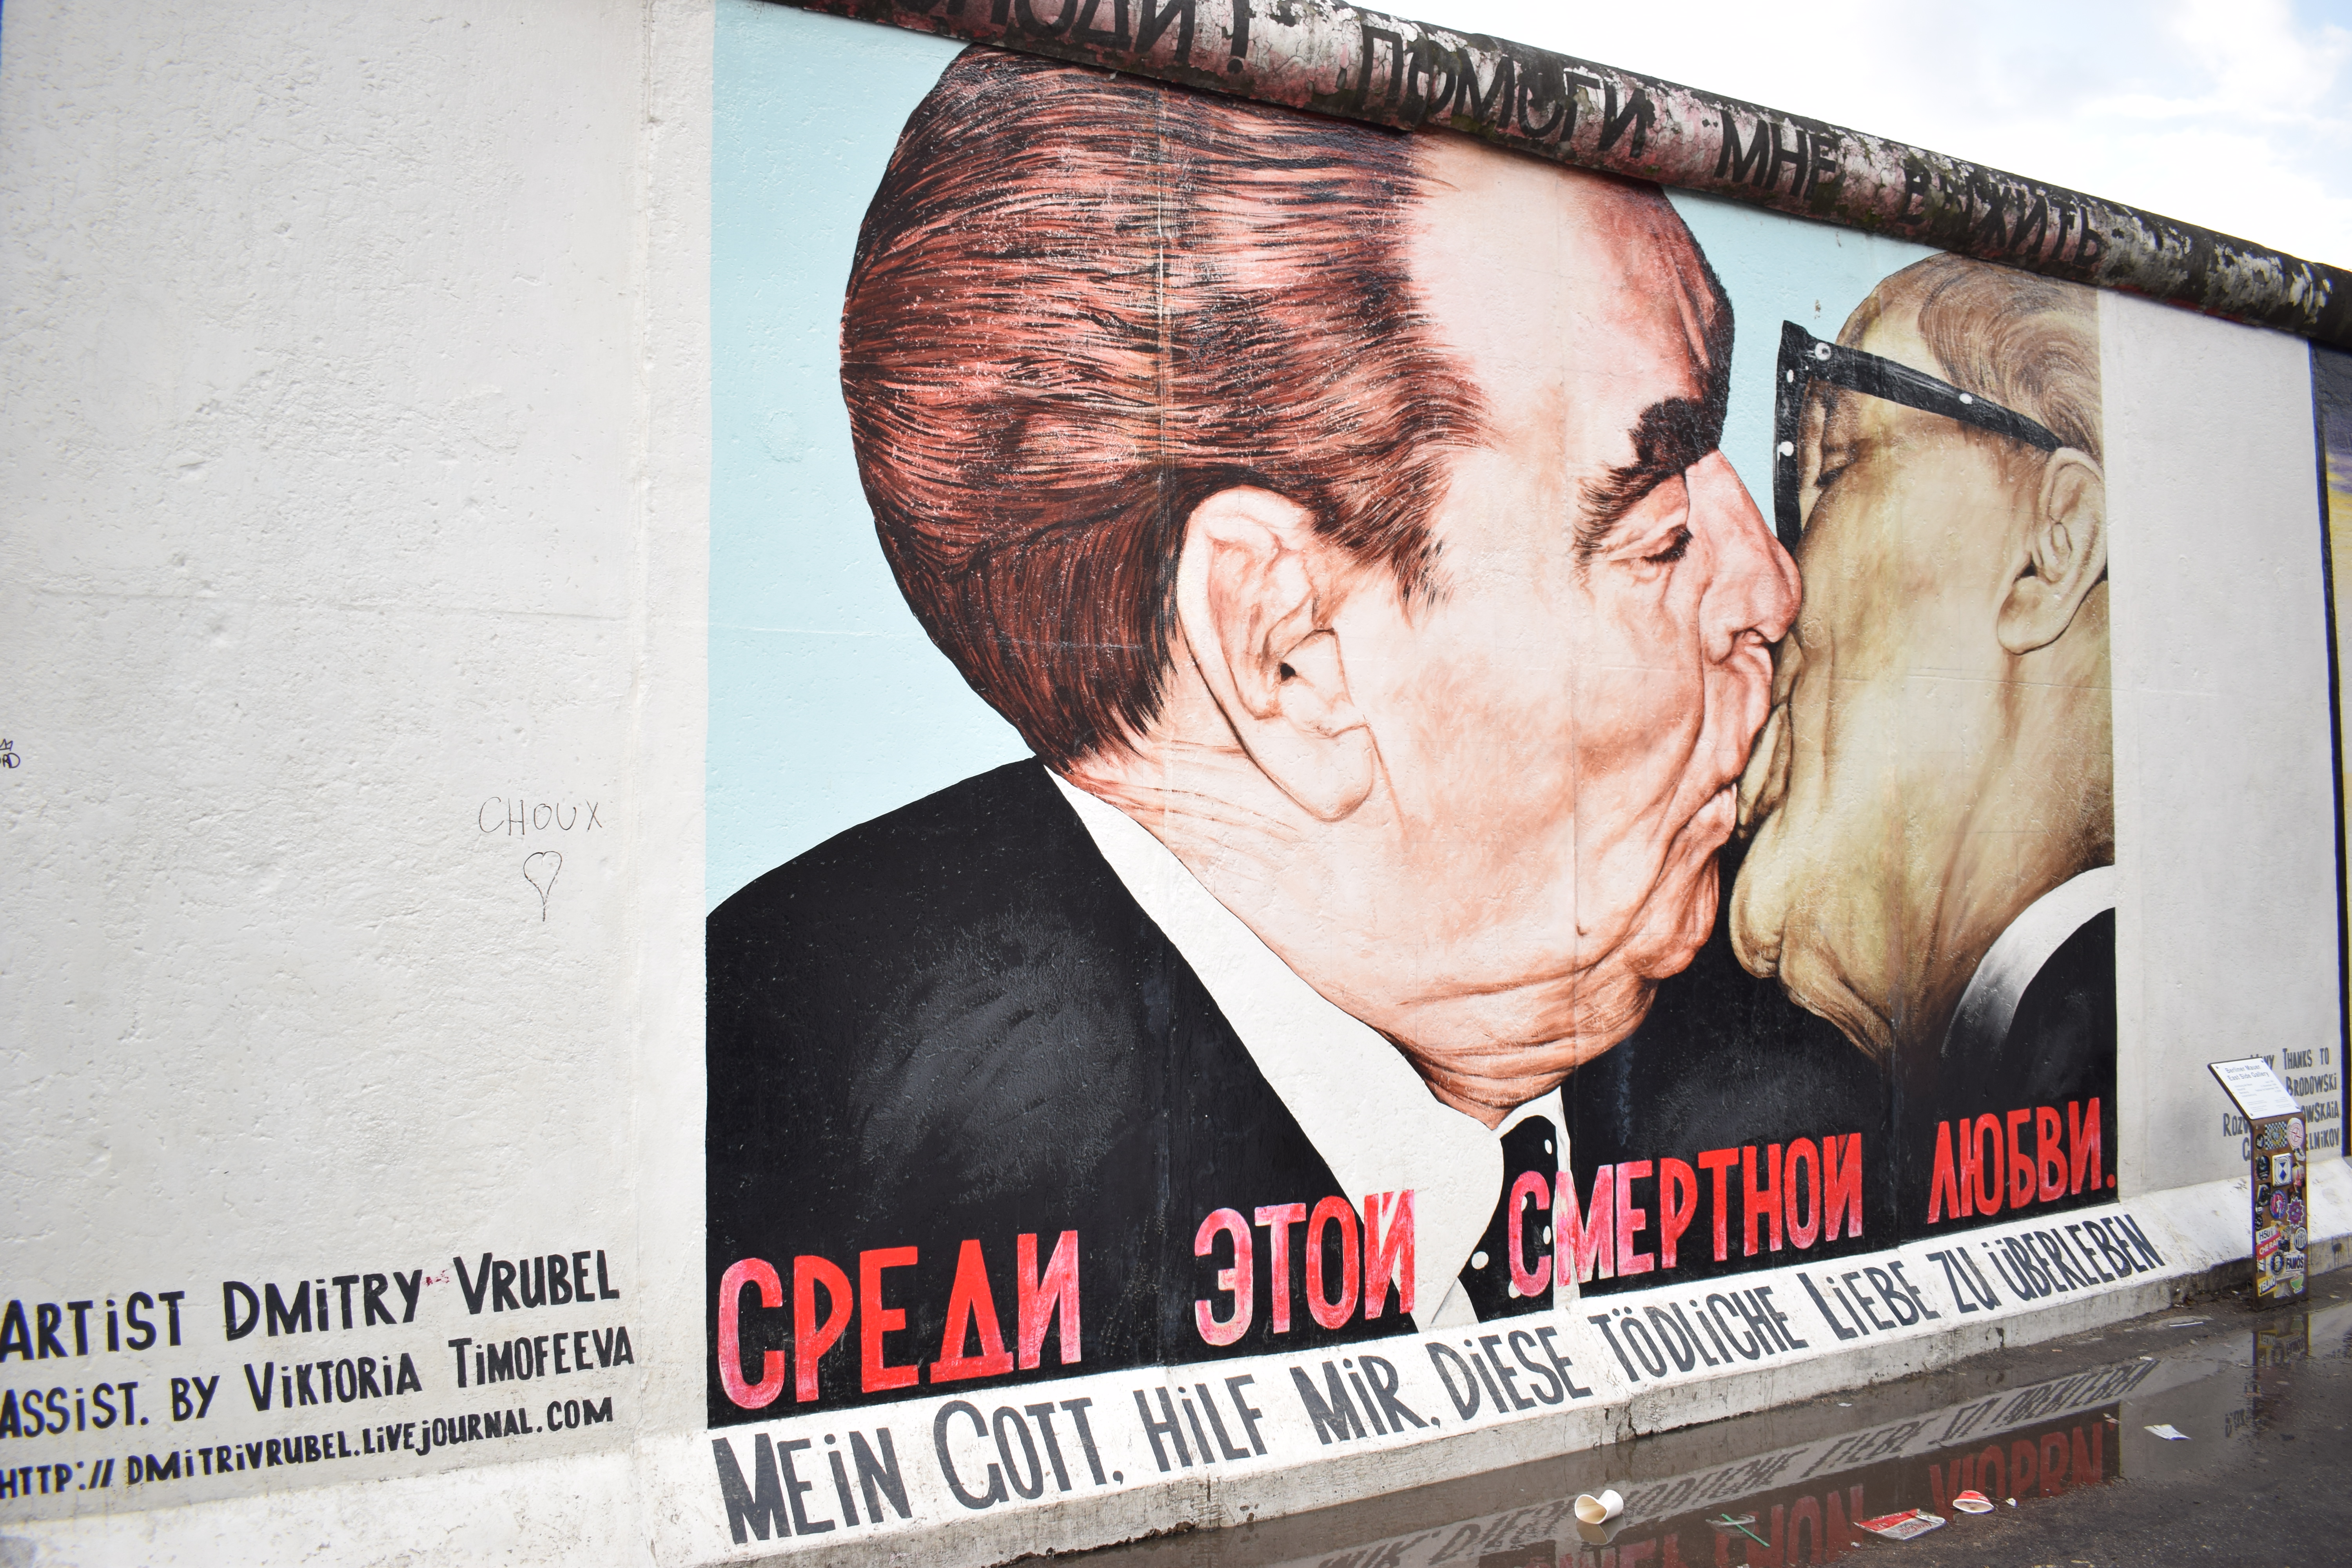 Berlin: Love Behind The Wall